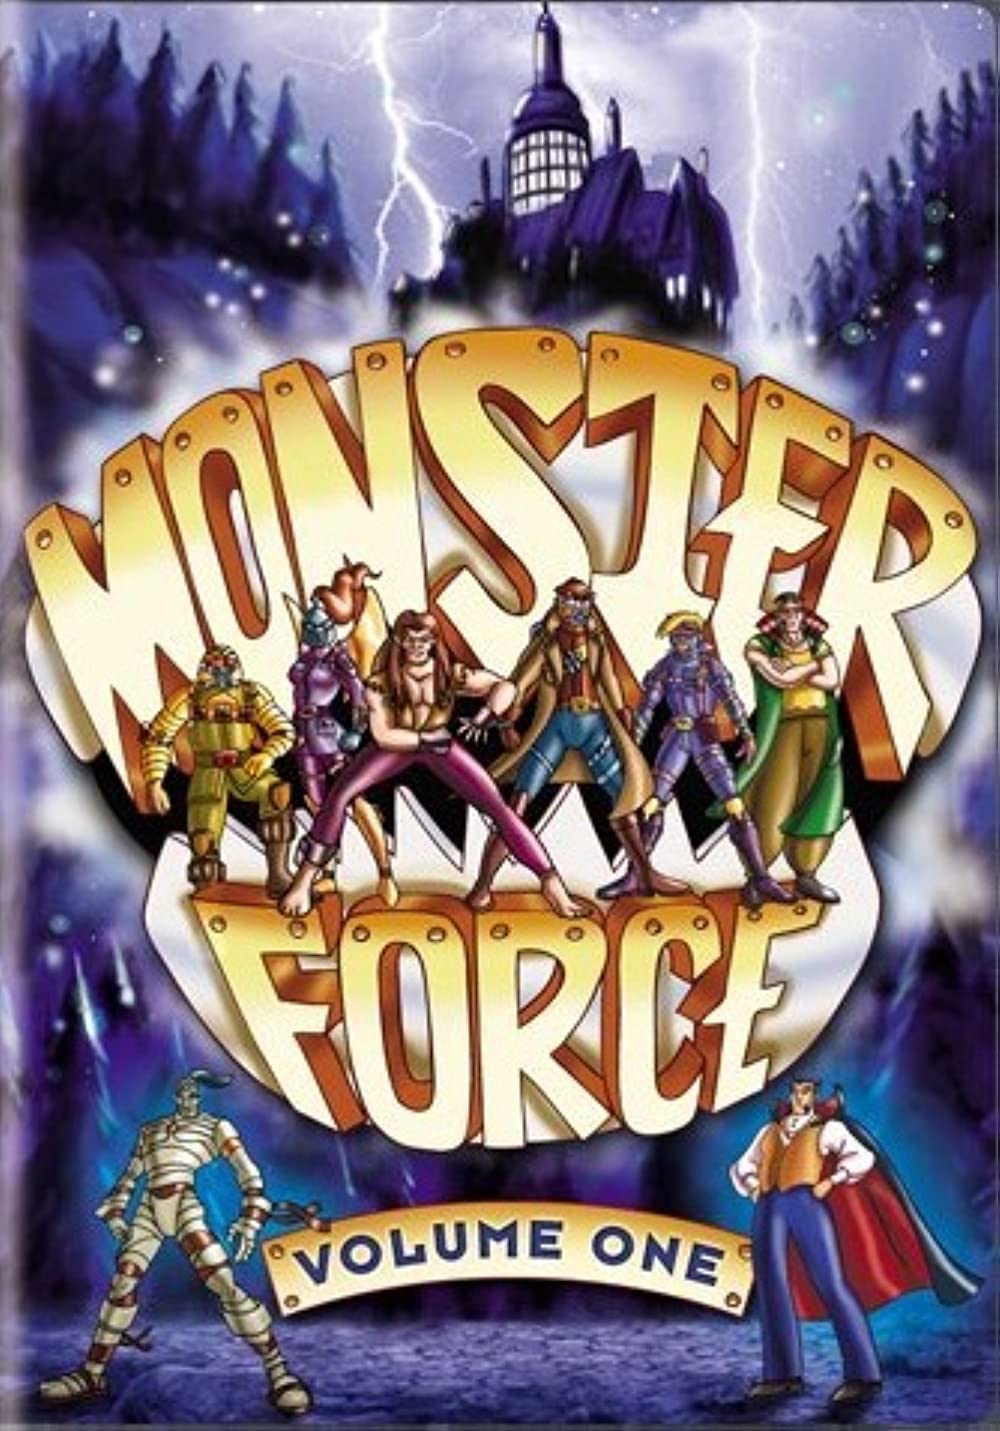 Monster Force Volume One - Poster
Keywords: monster_force_img